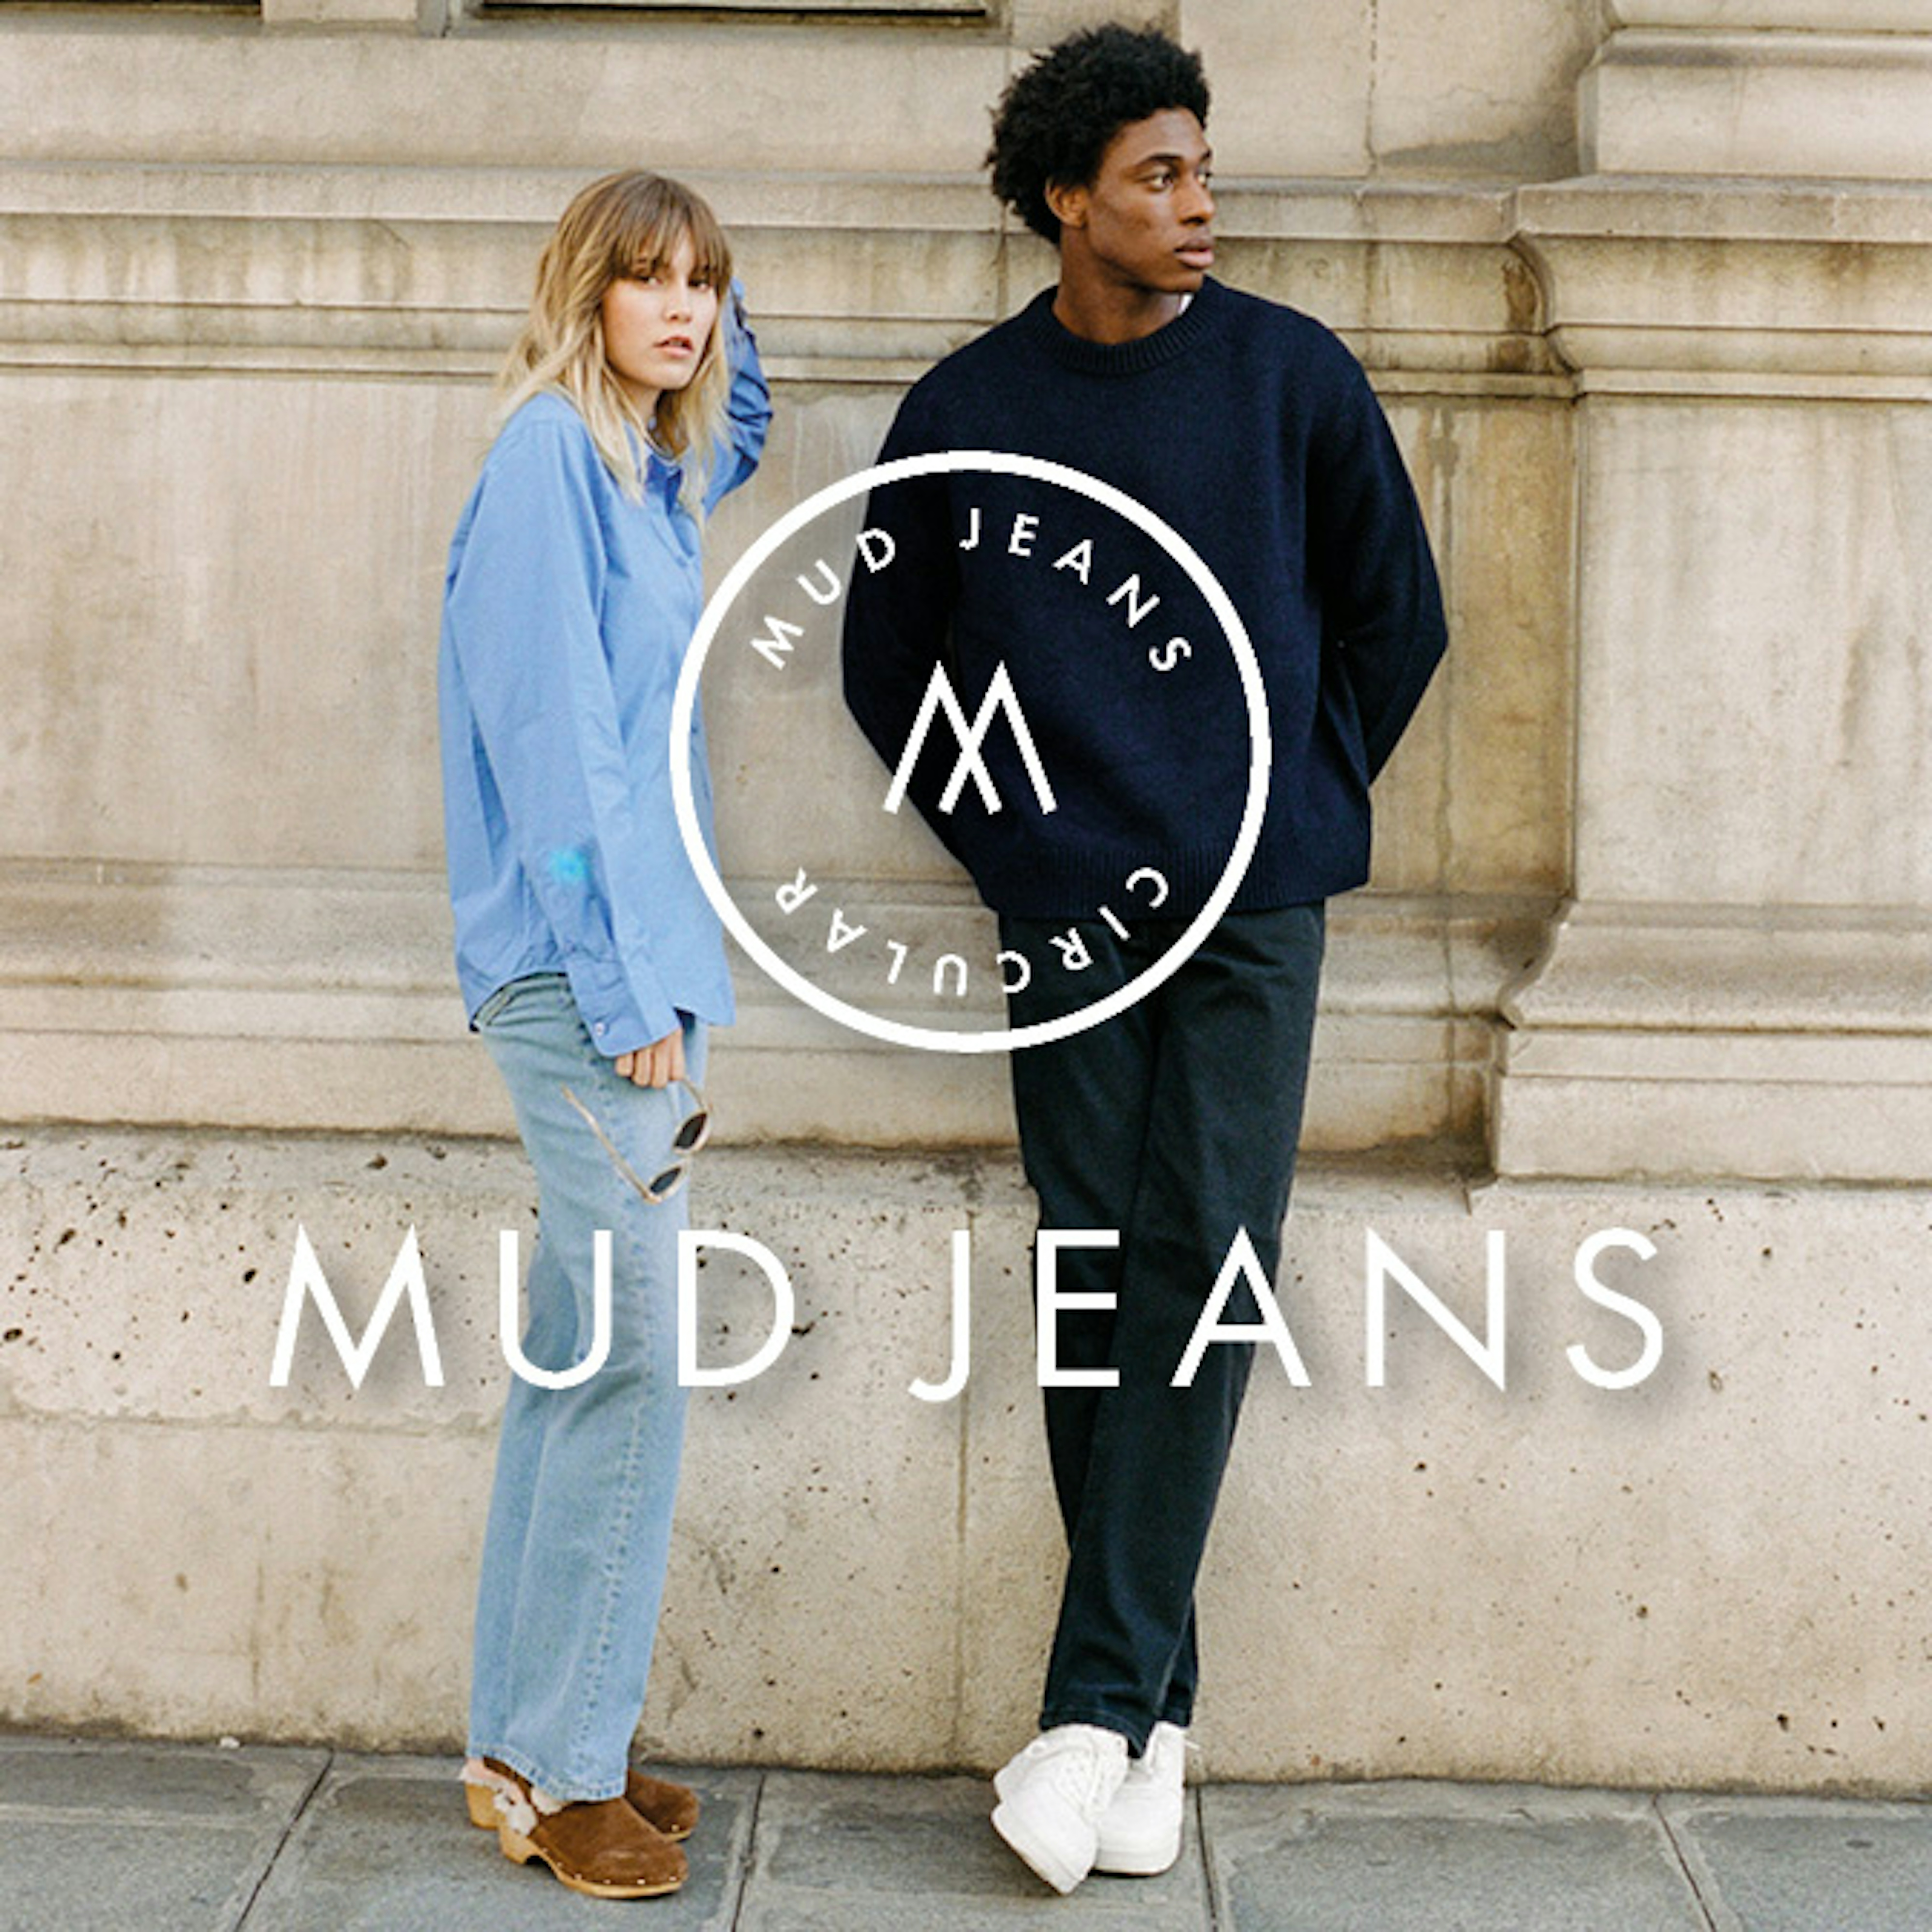 There jeans | Merken | De jeansspecialist Jeans Centre